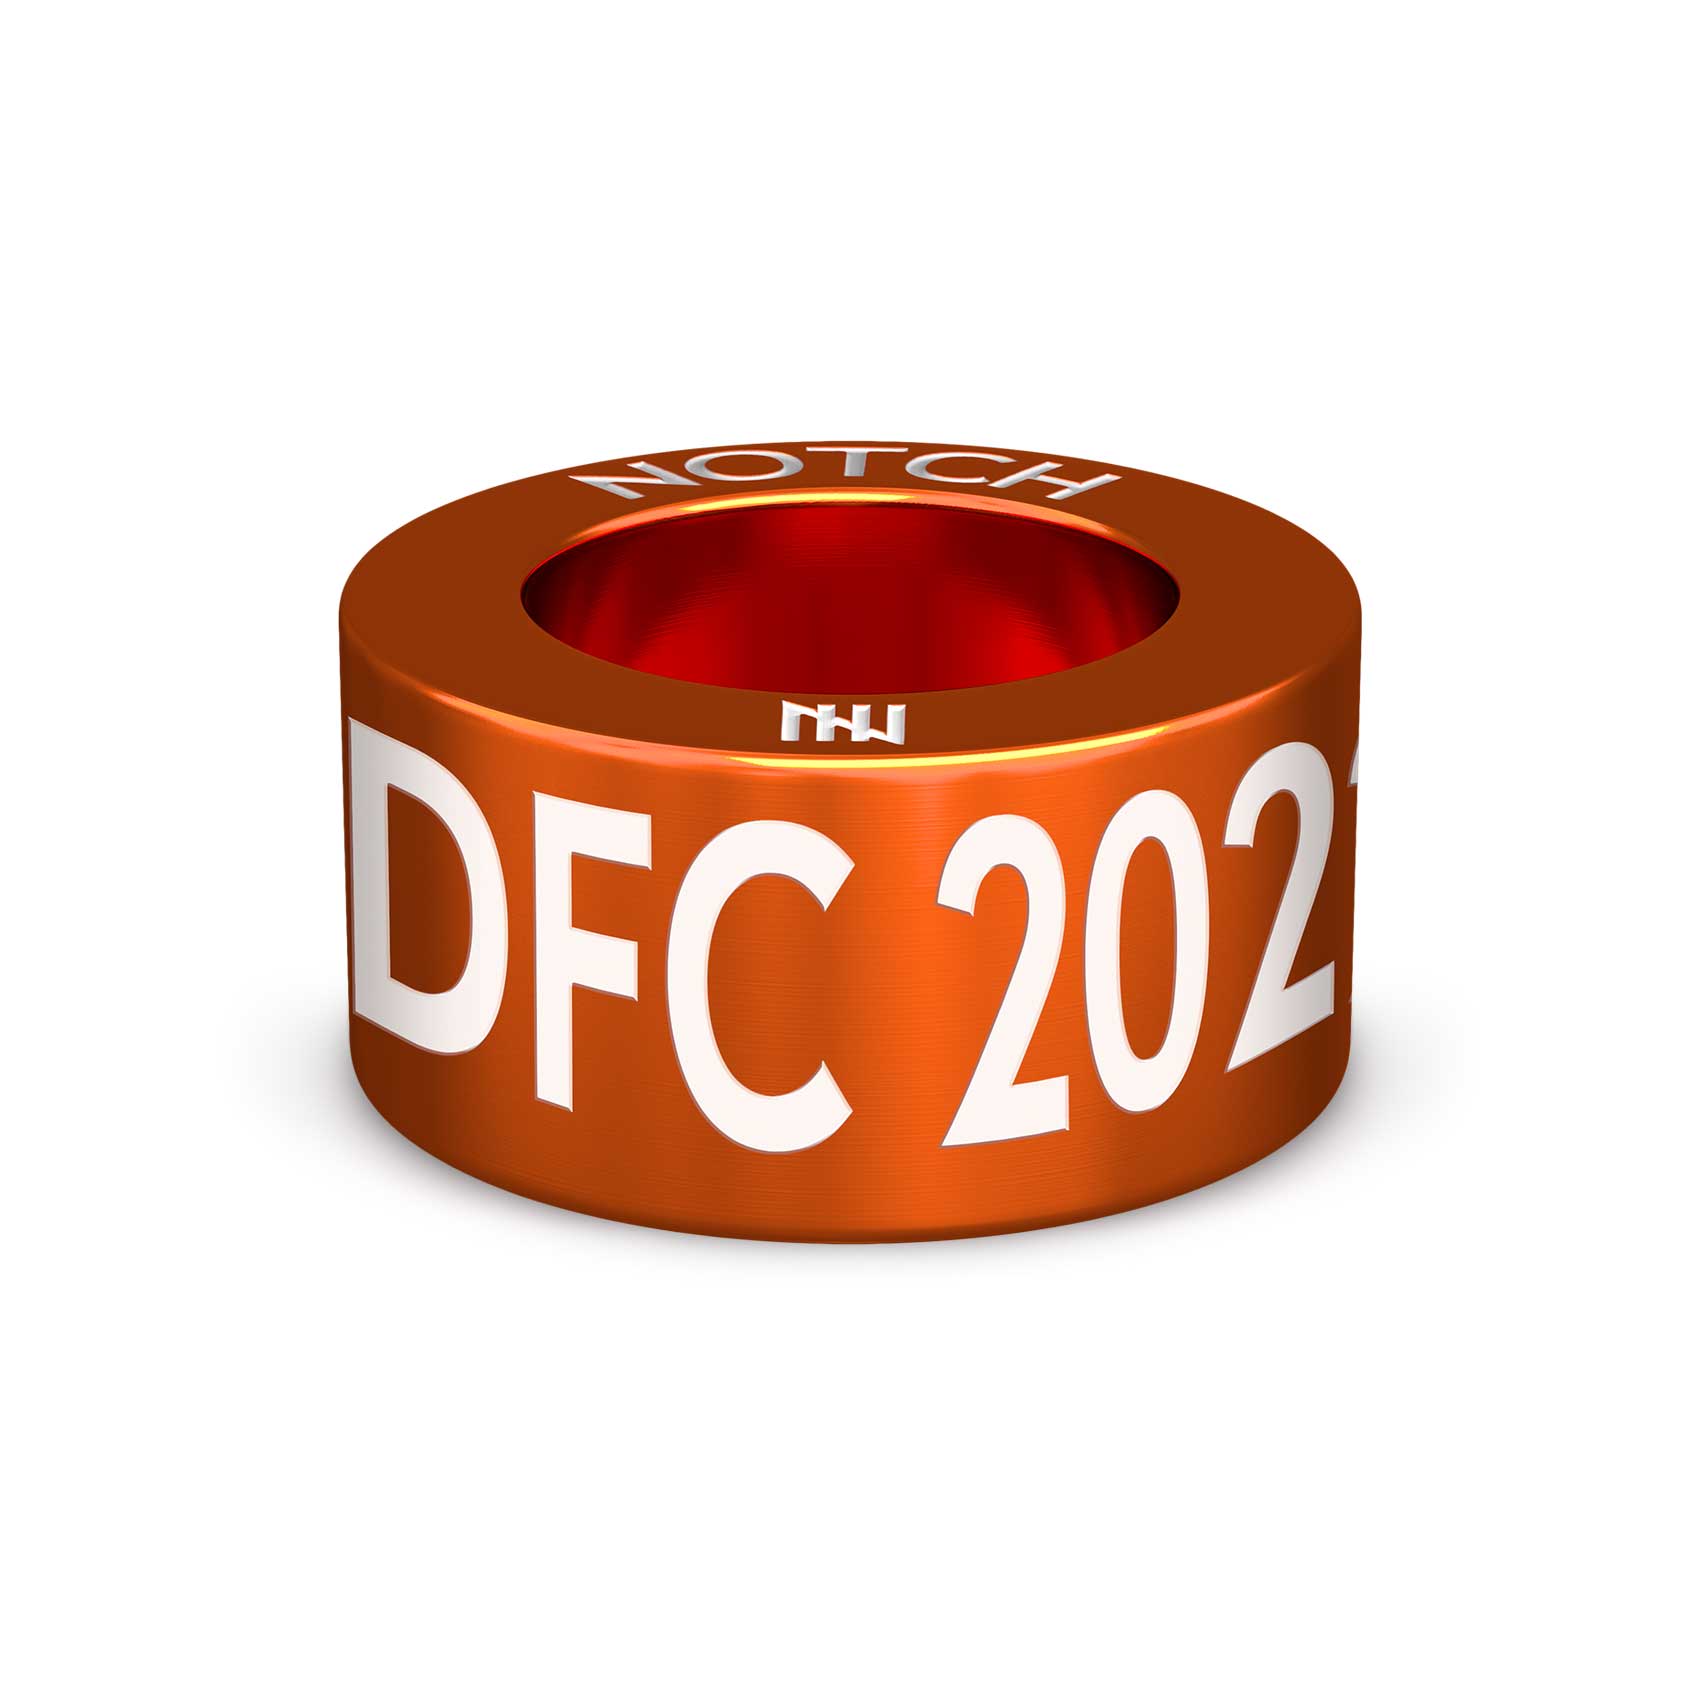 DFC 2022 NOTCH Charm